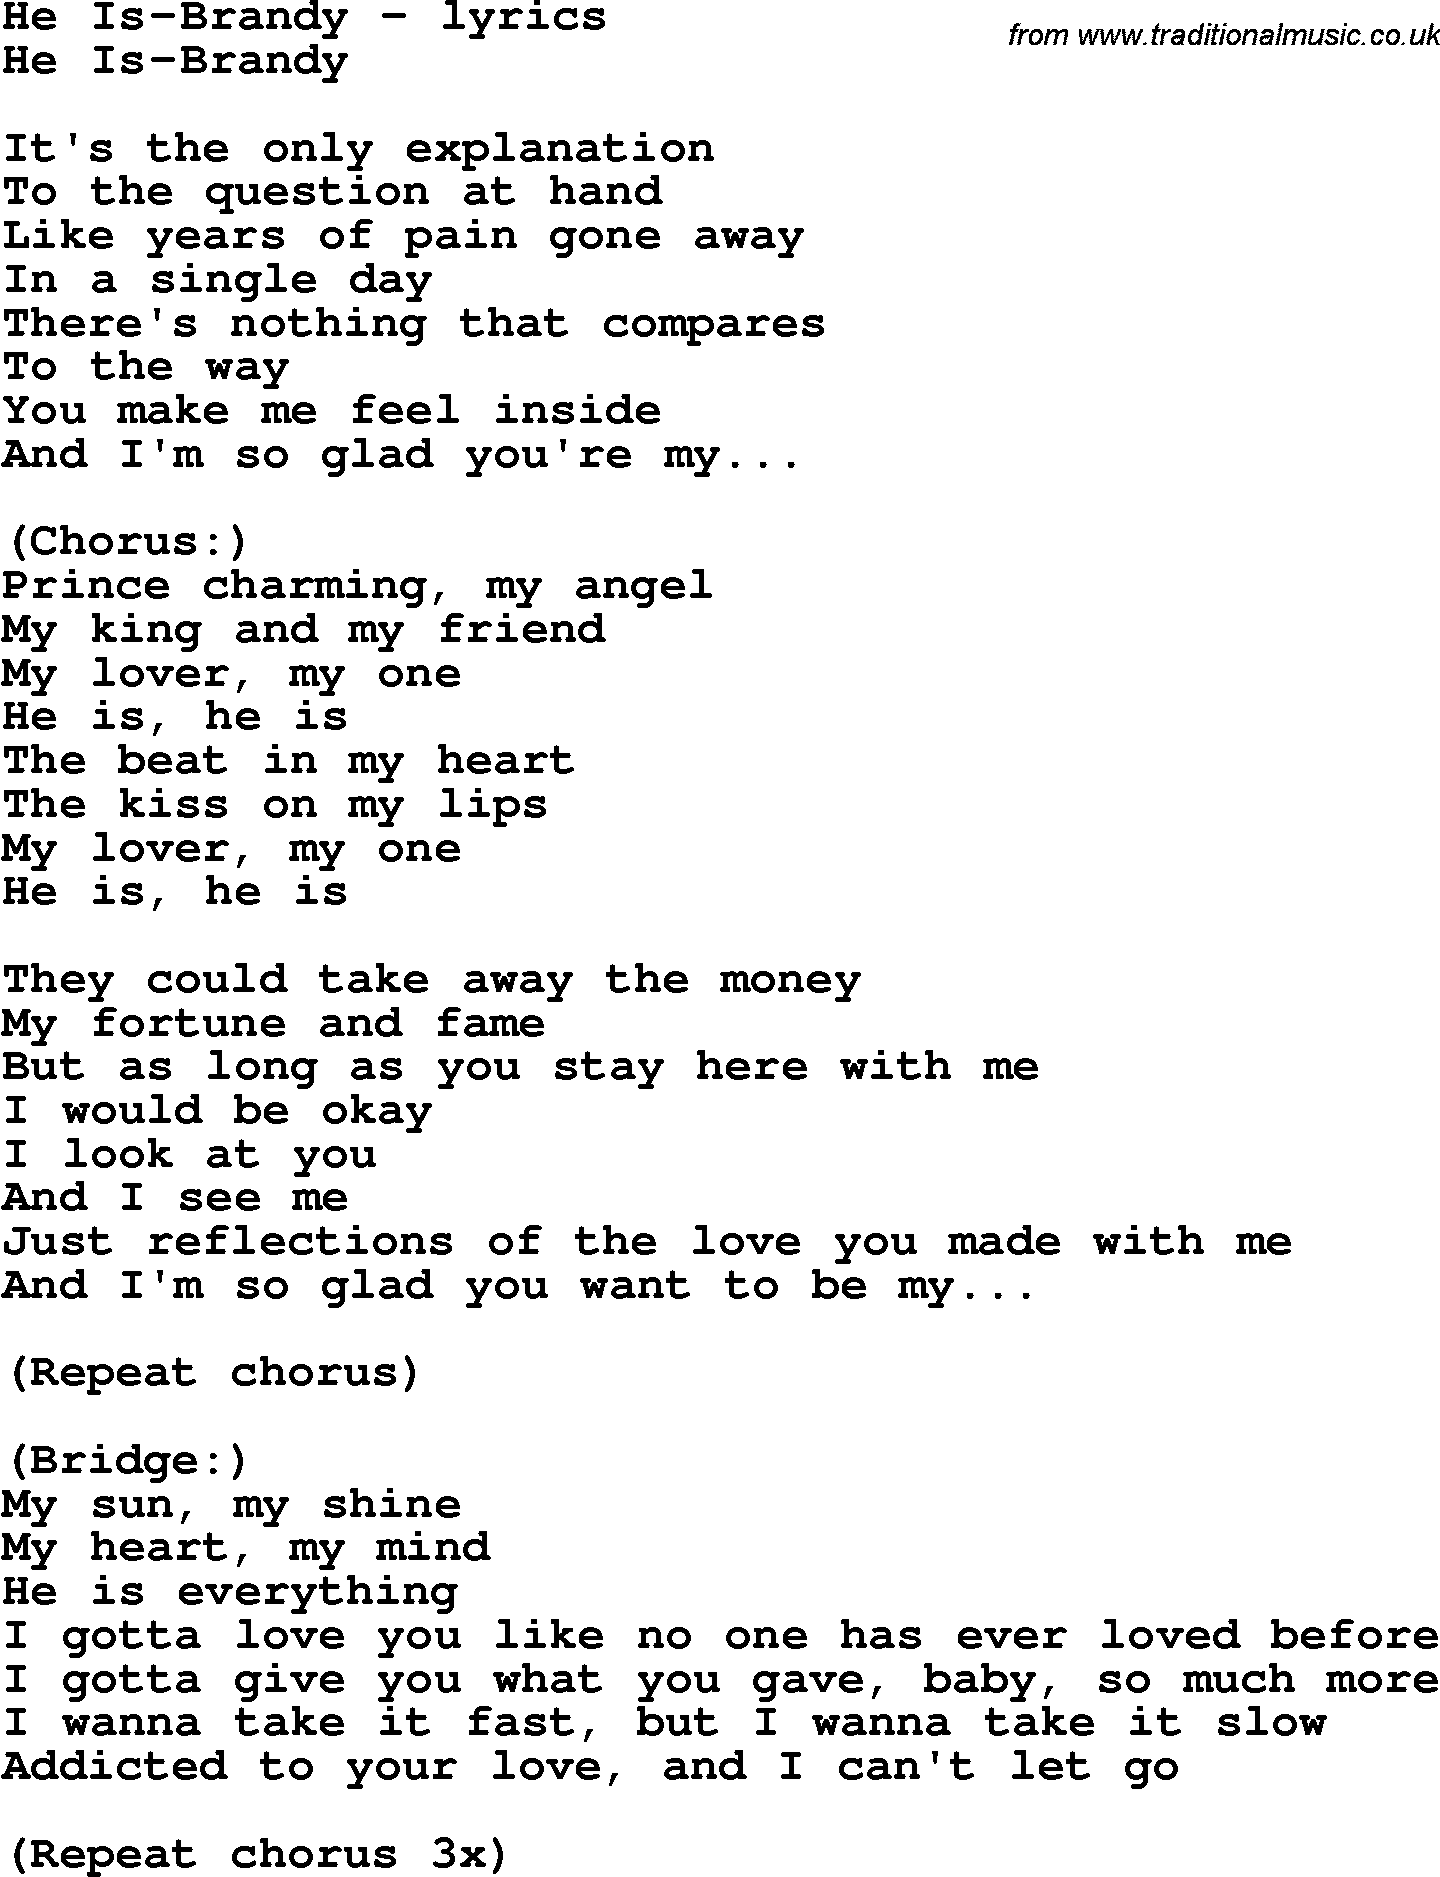 Love Song Lyrics for: He Is-Brandy